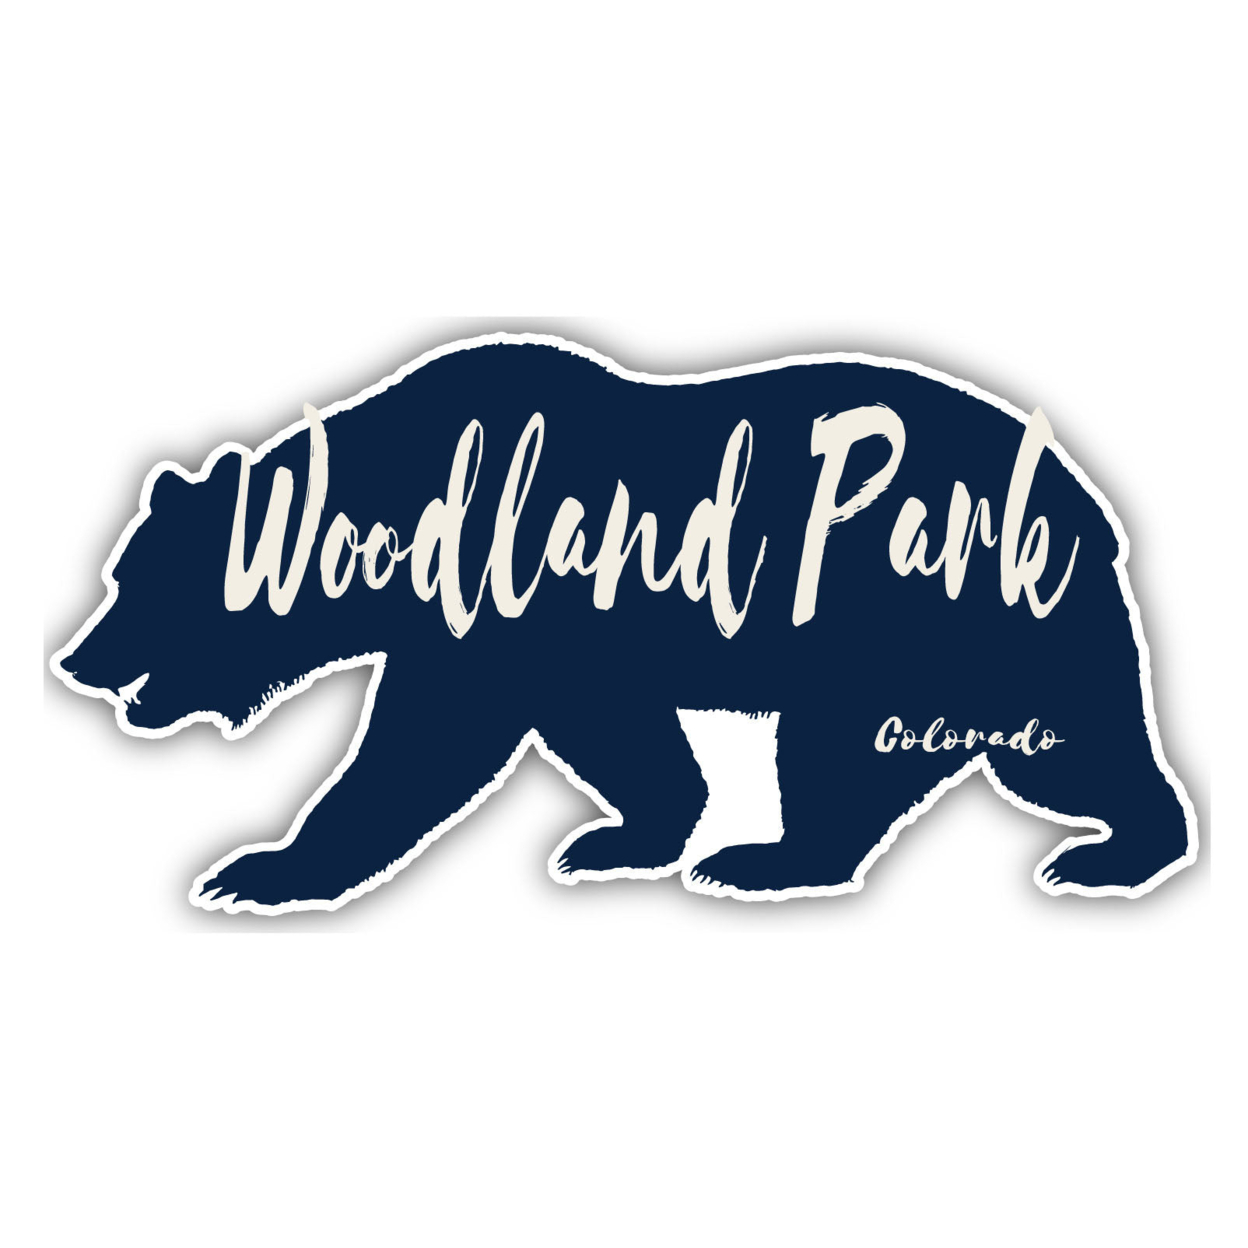 Woodland Park Colorado Souvenir Decorative Stickers (Choose Theme And Size) - Single Unit, 4-Inch, Bear